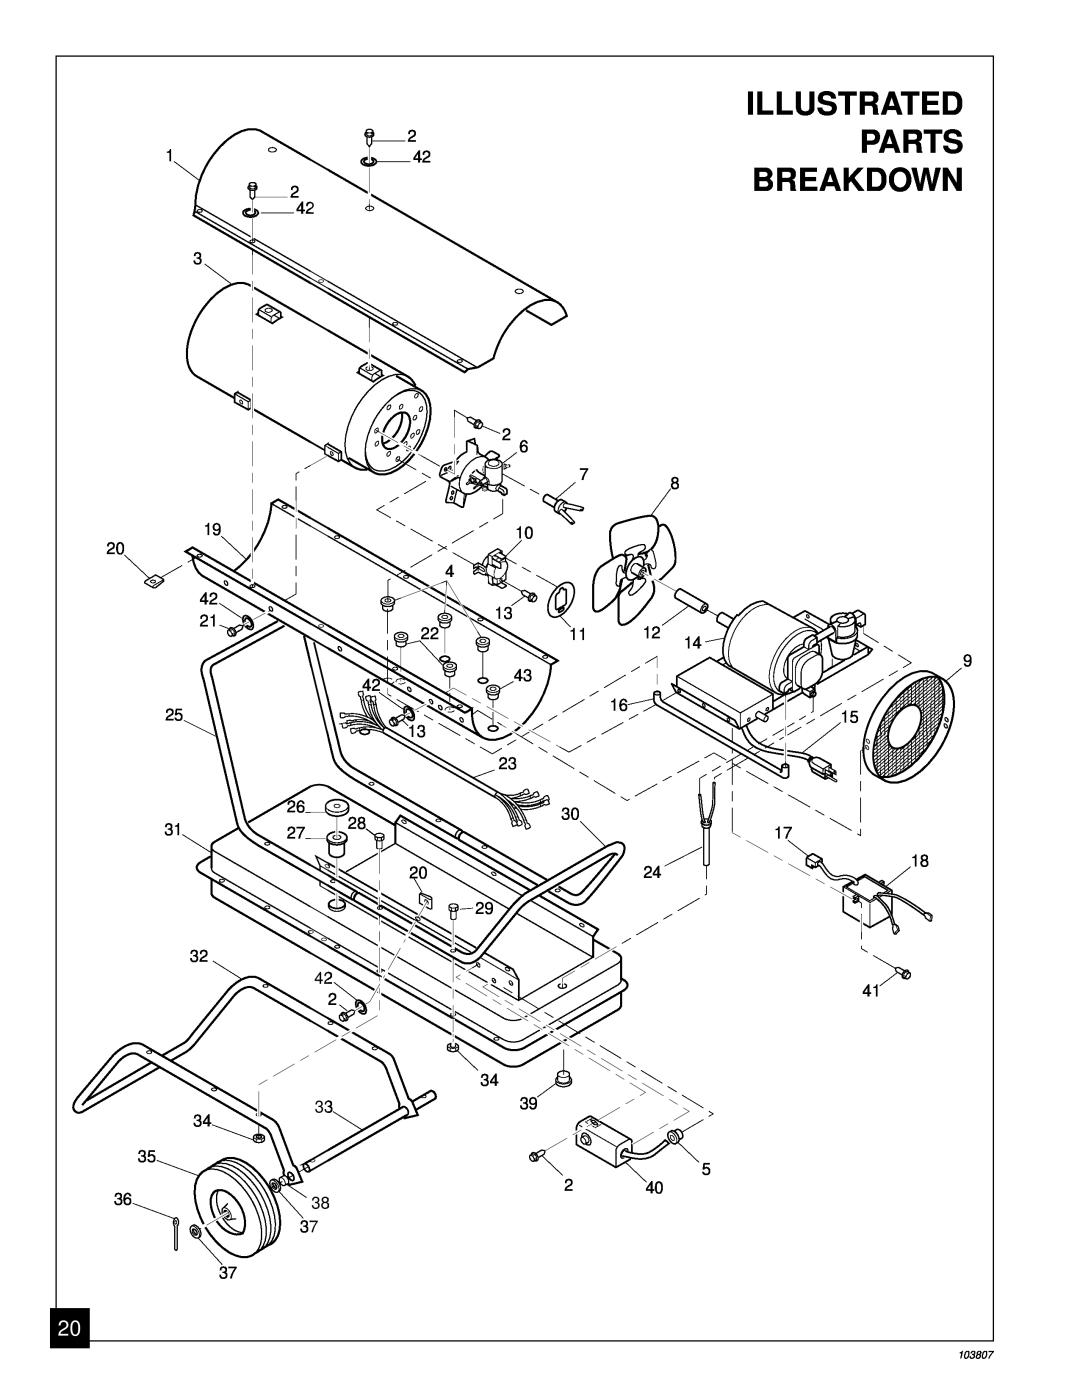 Desa B350CEA owner manual Illustrated, Parts, Breakdown 